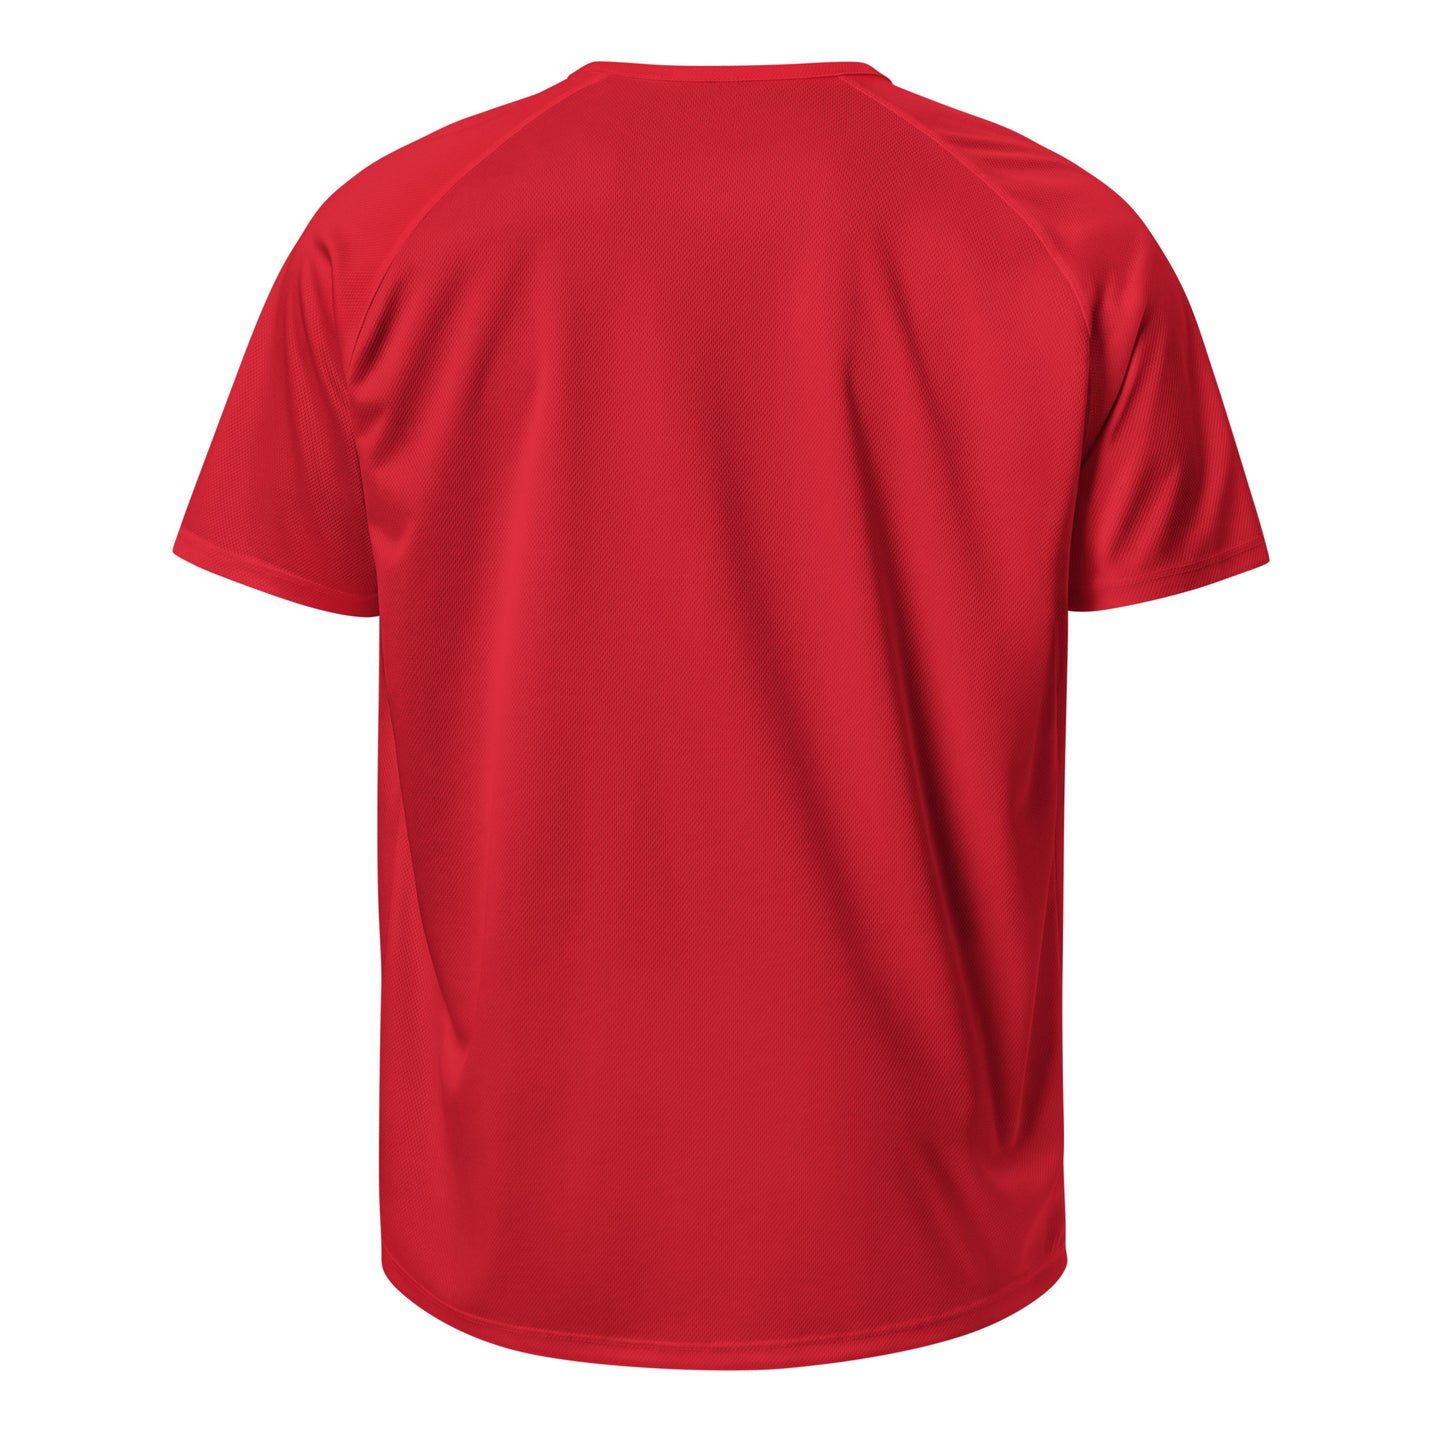 Unisex sports t-shirt